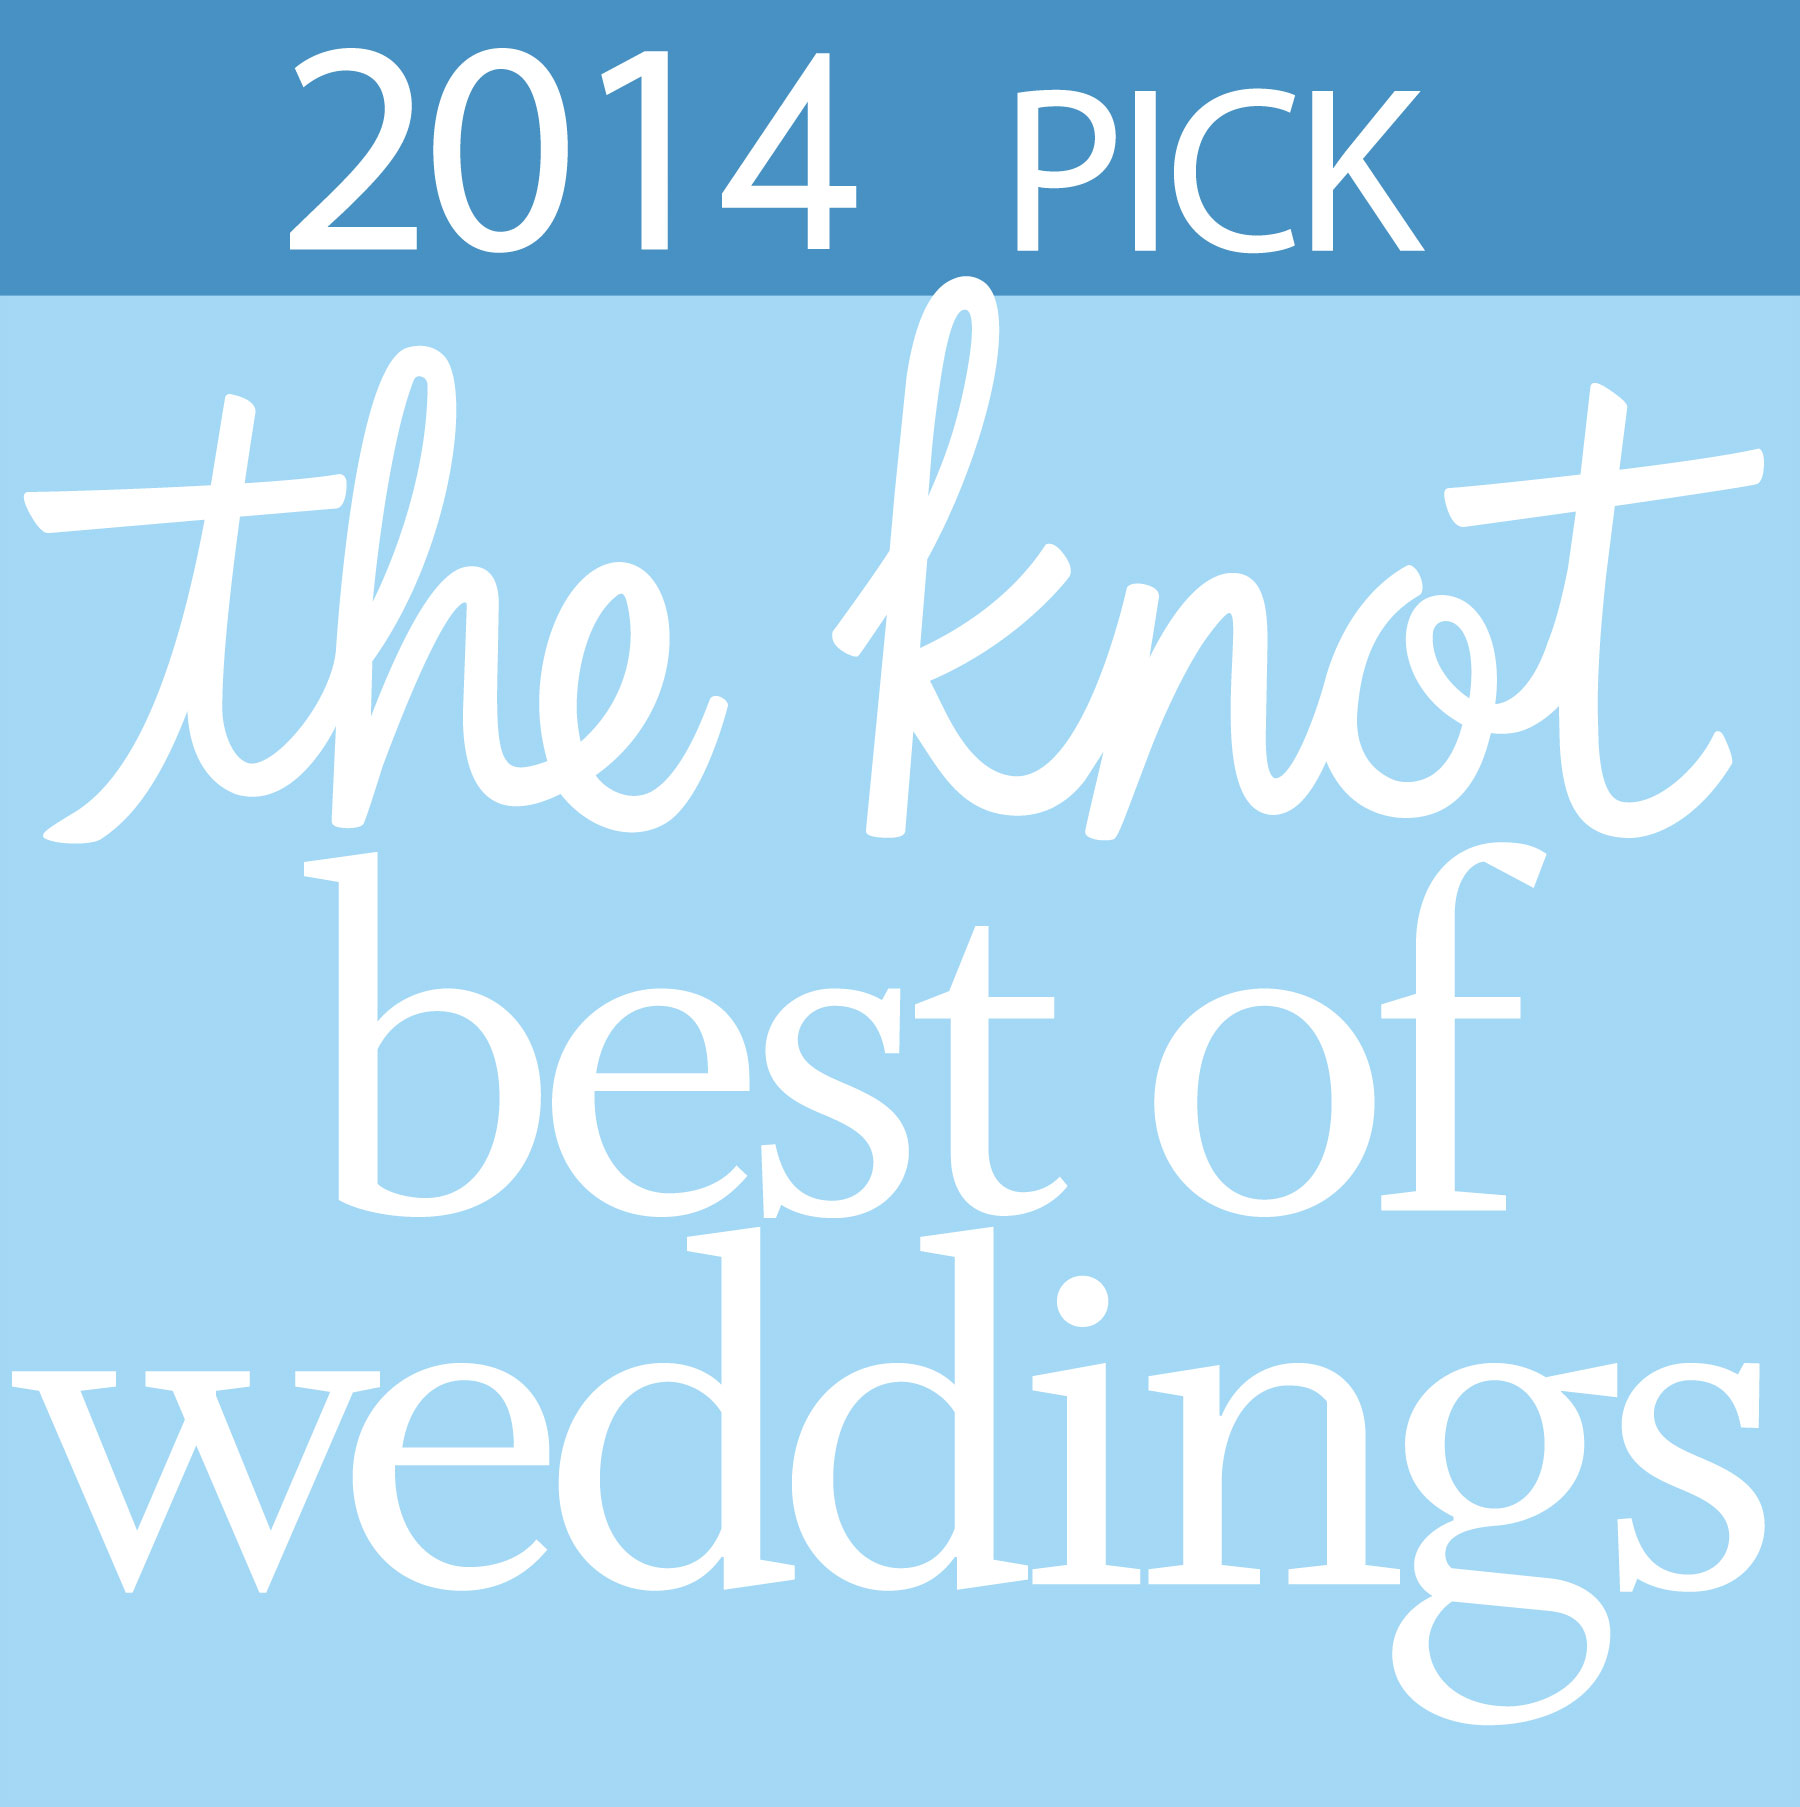 Knot Best of Weddings 2014